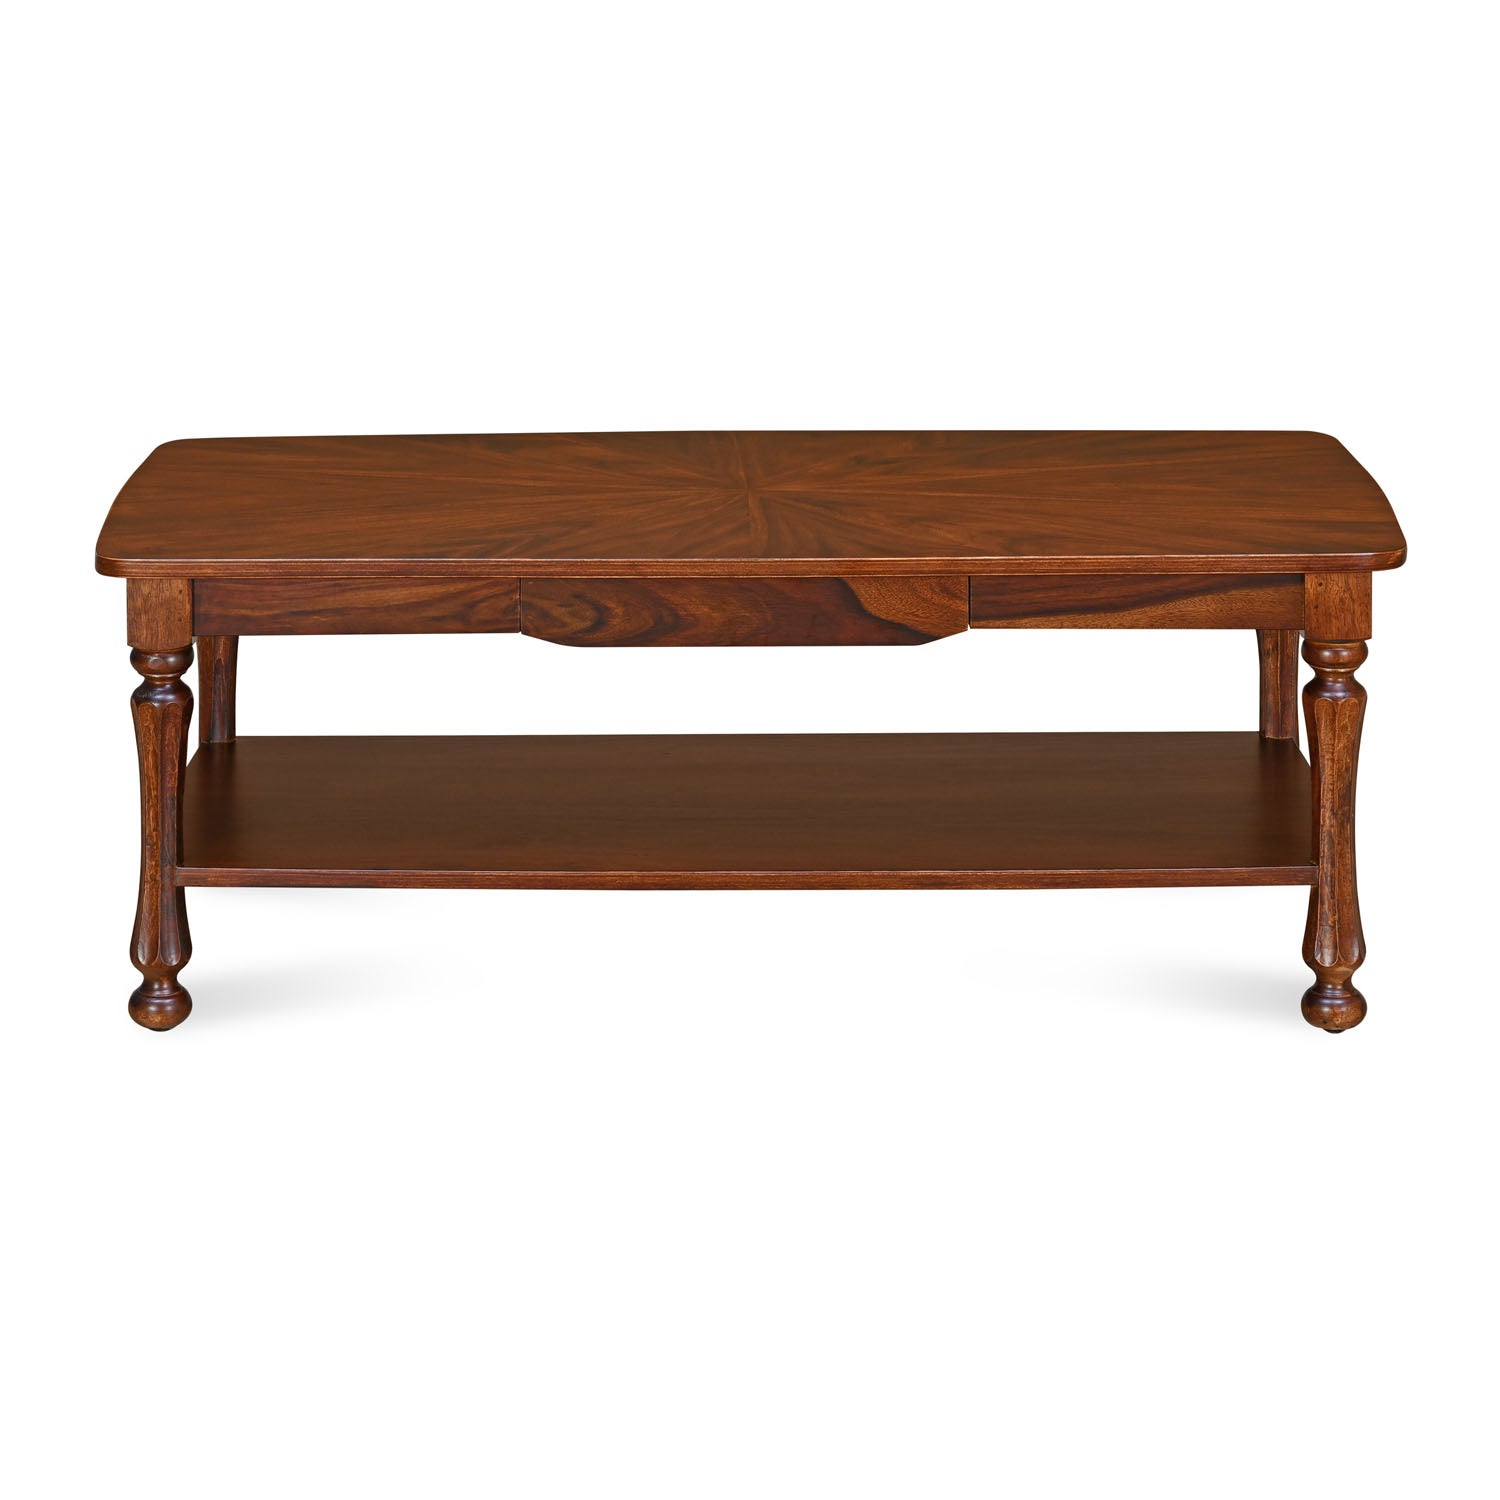 Juliet Solid Wood Center Table with Drawer & Shelf Storage (Light Antique)